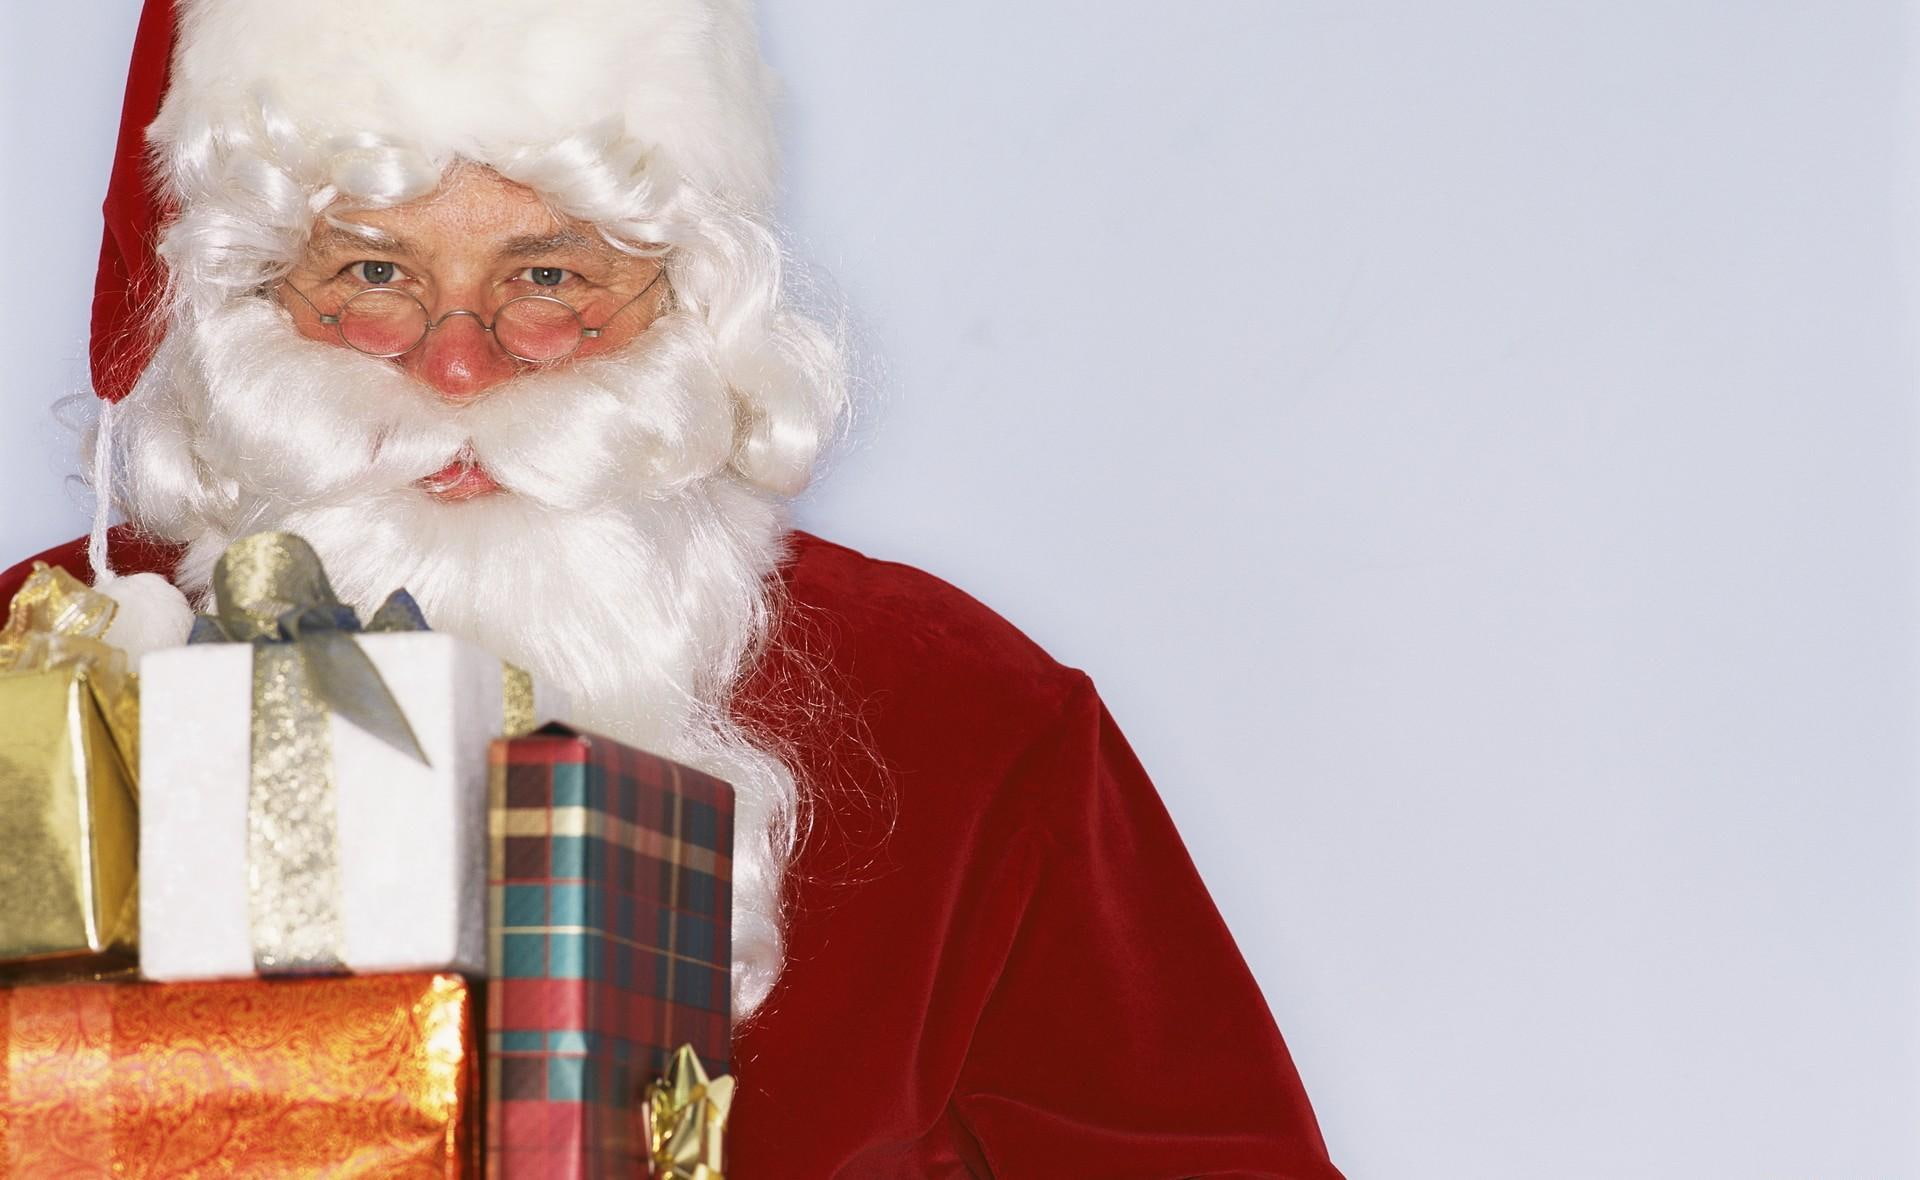 santa claus, face, beard, glasses, gifts, new year, christmas, holiday, santa claus with gift present boxes